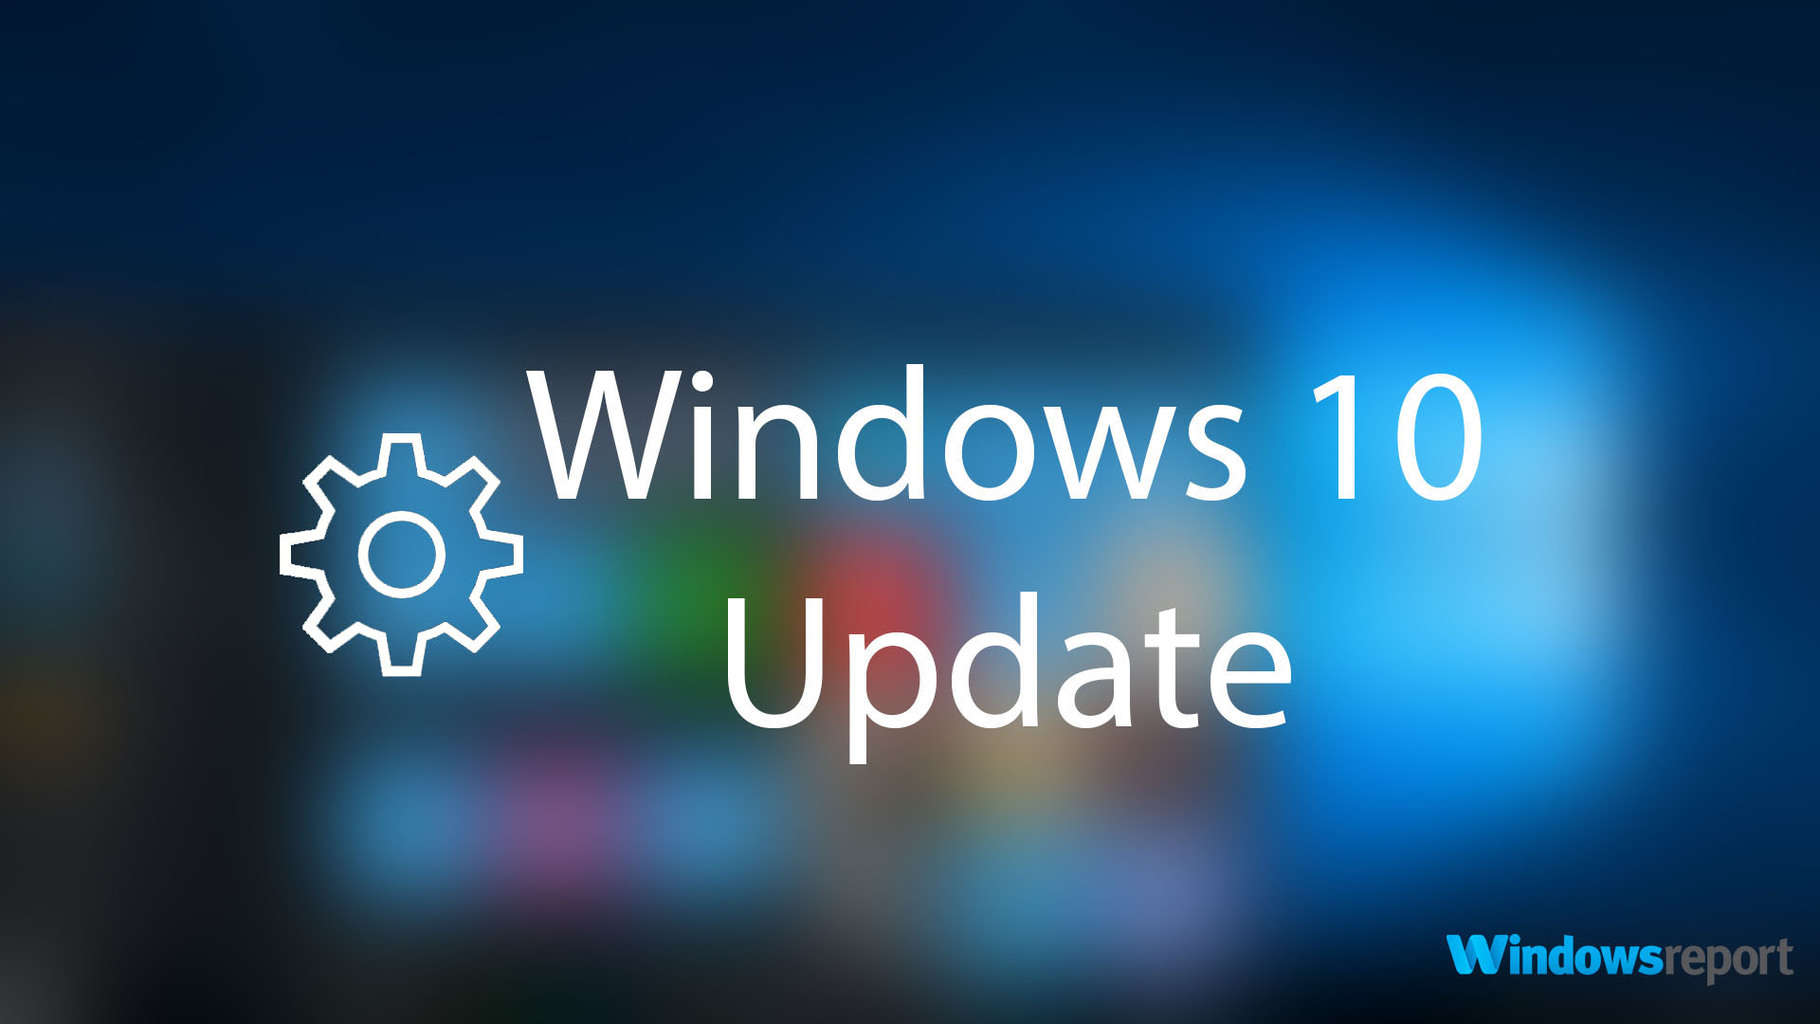 windows-10-update-windows-report1.jpg